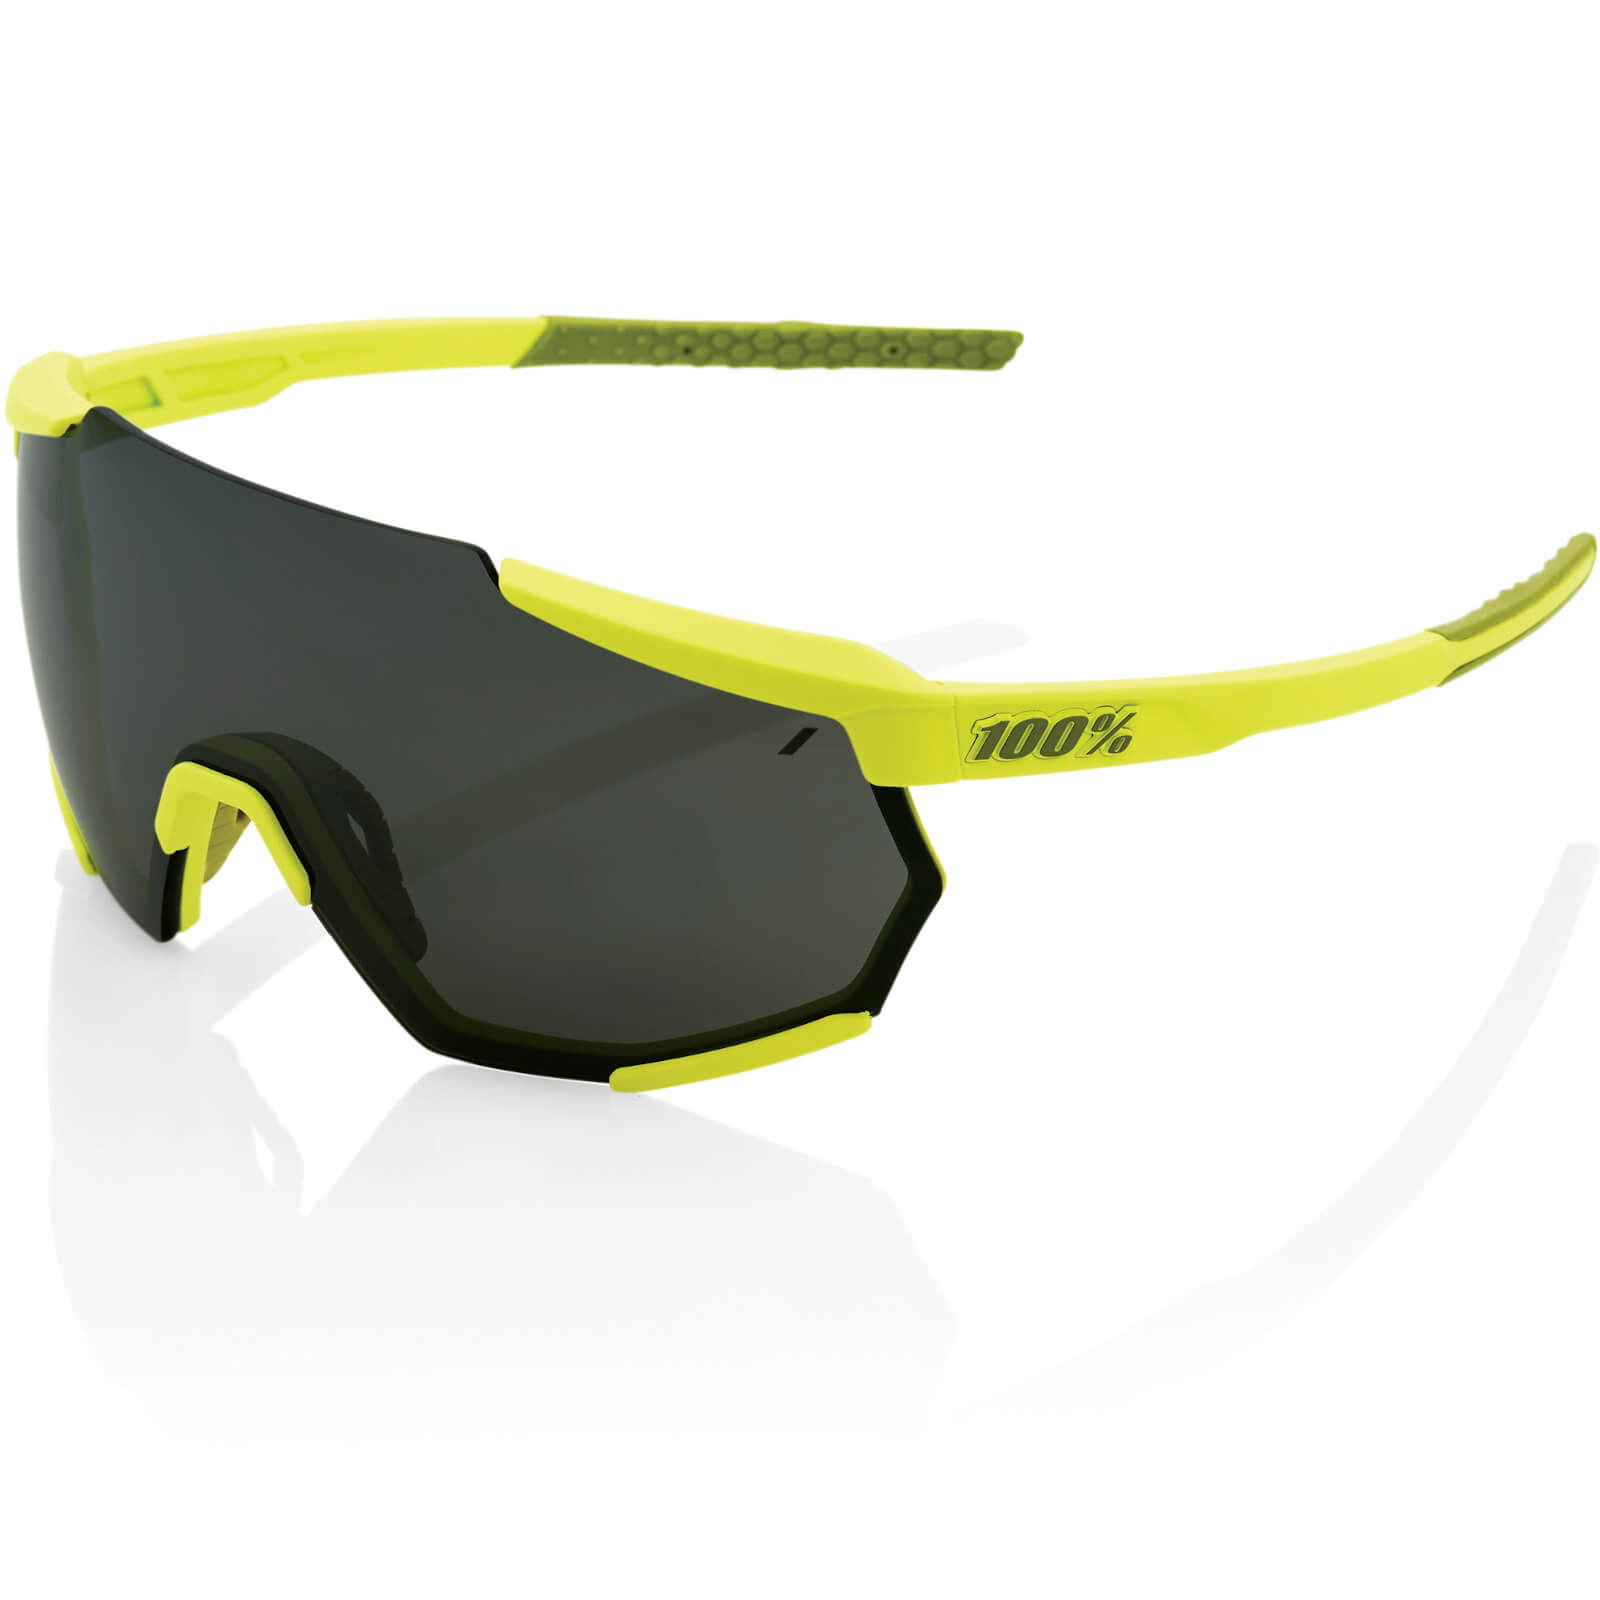 ProBikeKit UK 100% Racetrap Sunglasses with Black Mirror Lens